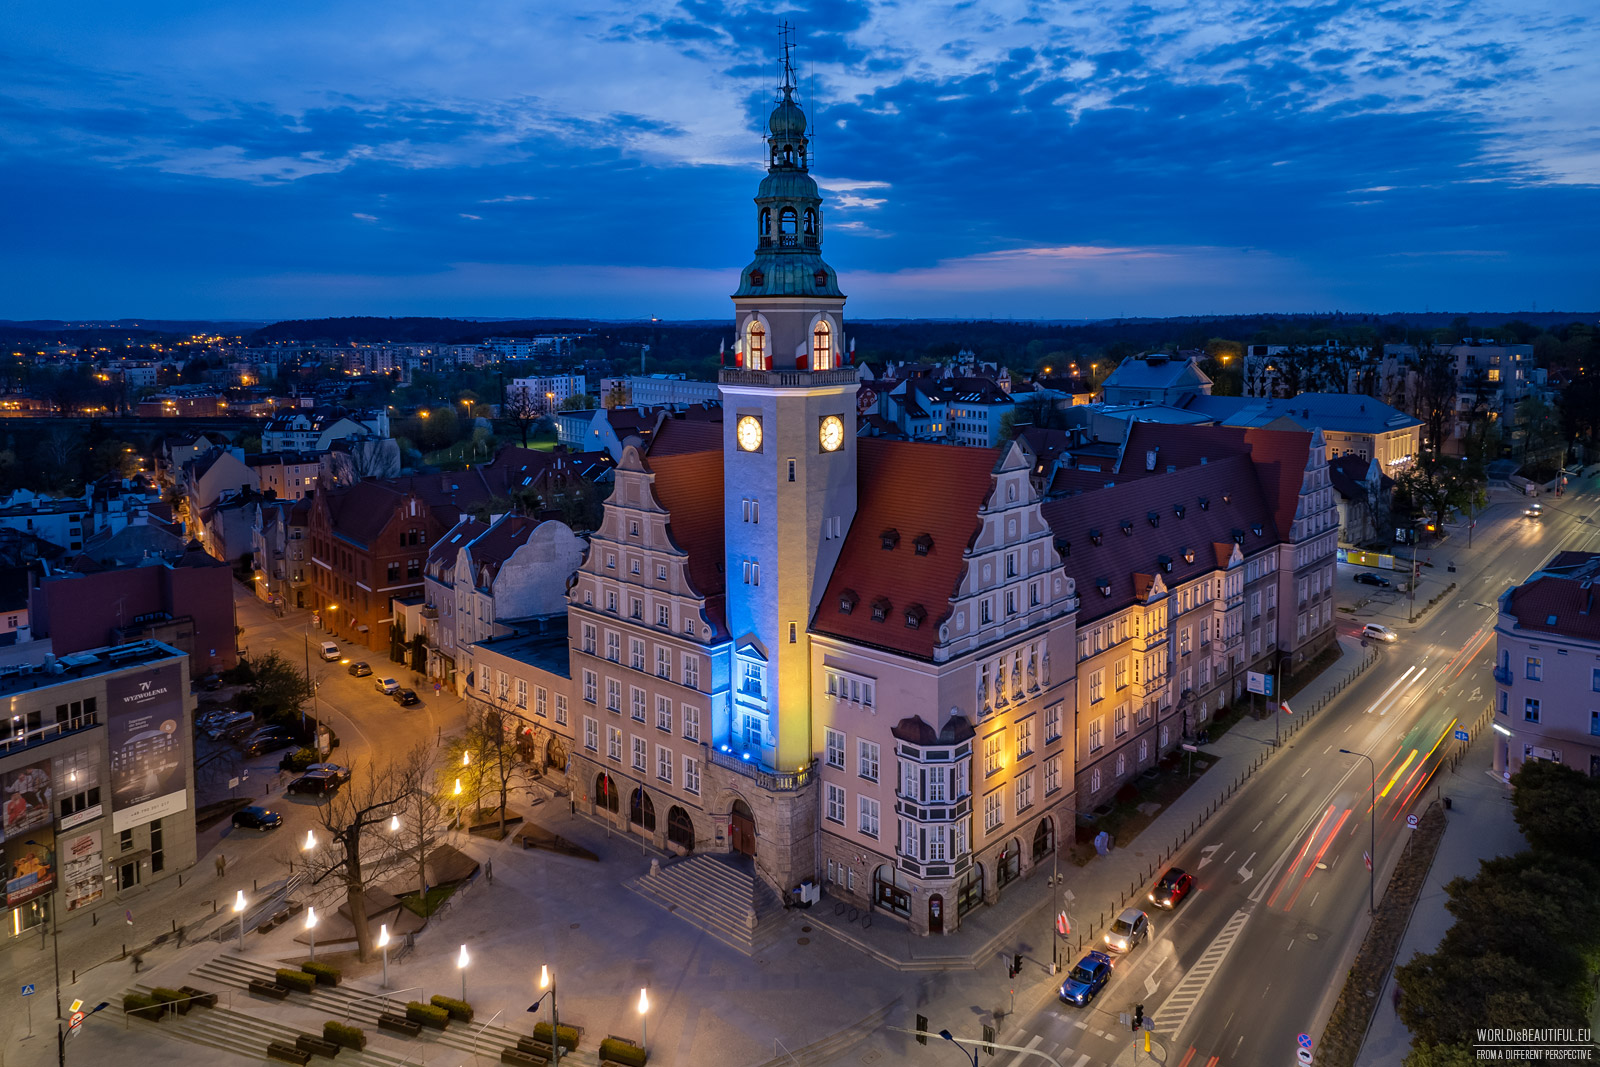 Olsztyn City Hall at night